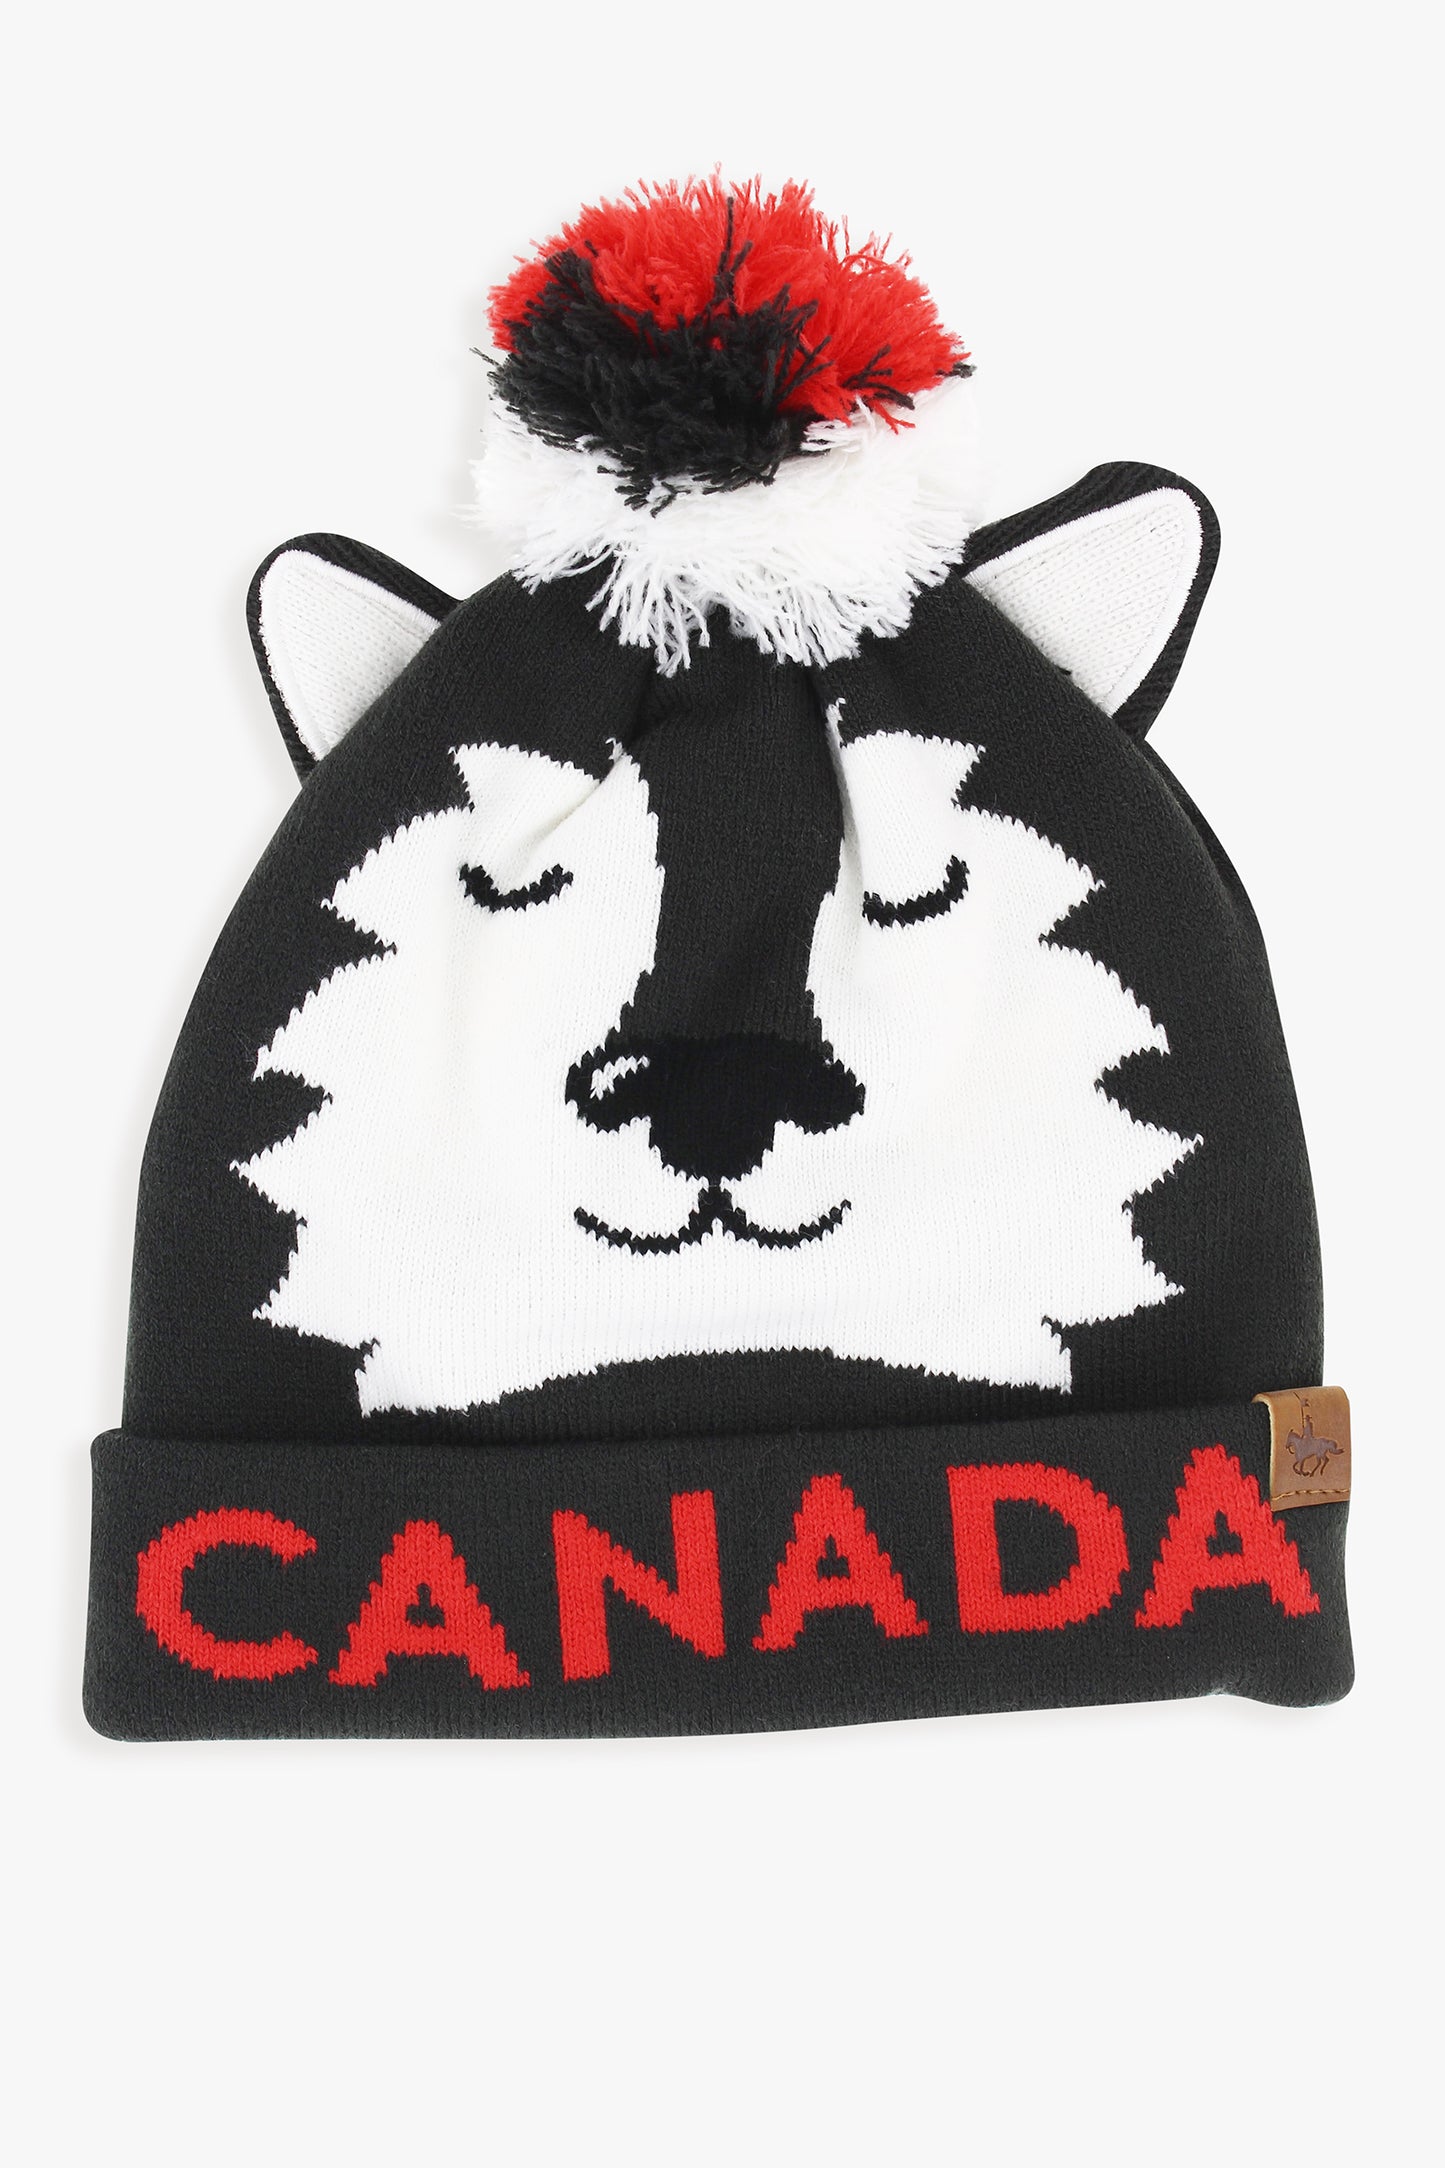 RCMP Royal Canadian Mounted Police Unisex Kids Critter Pom Pom Winter Toque Hat Black